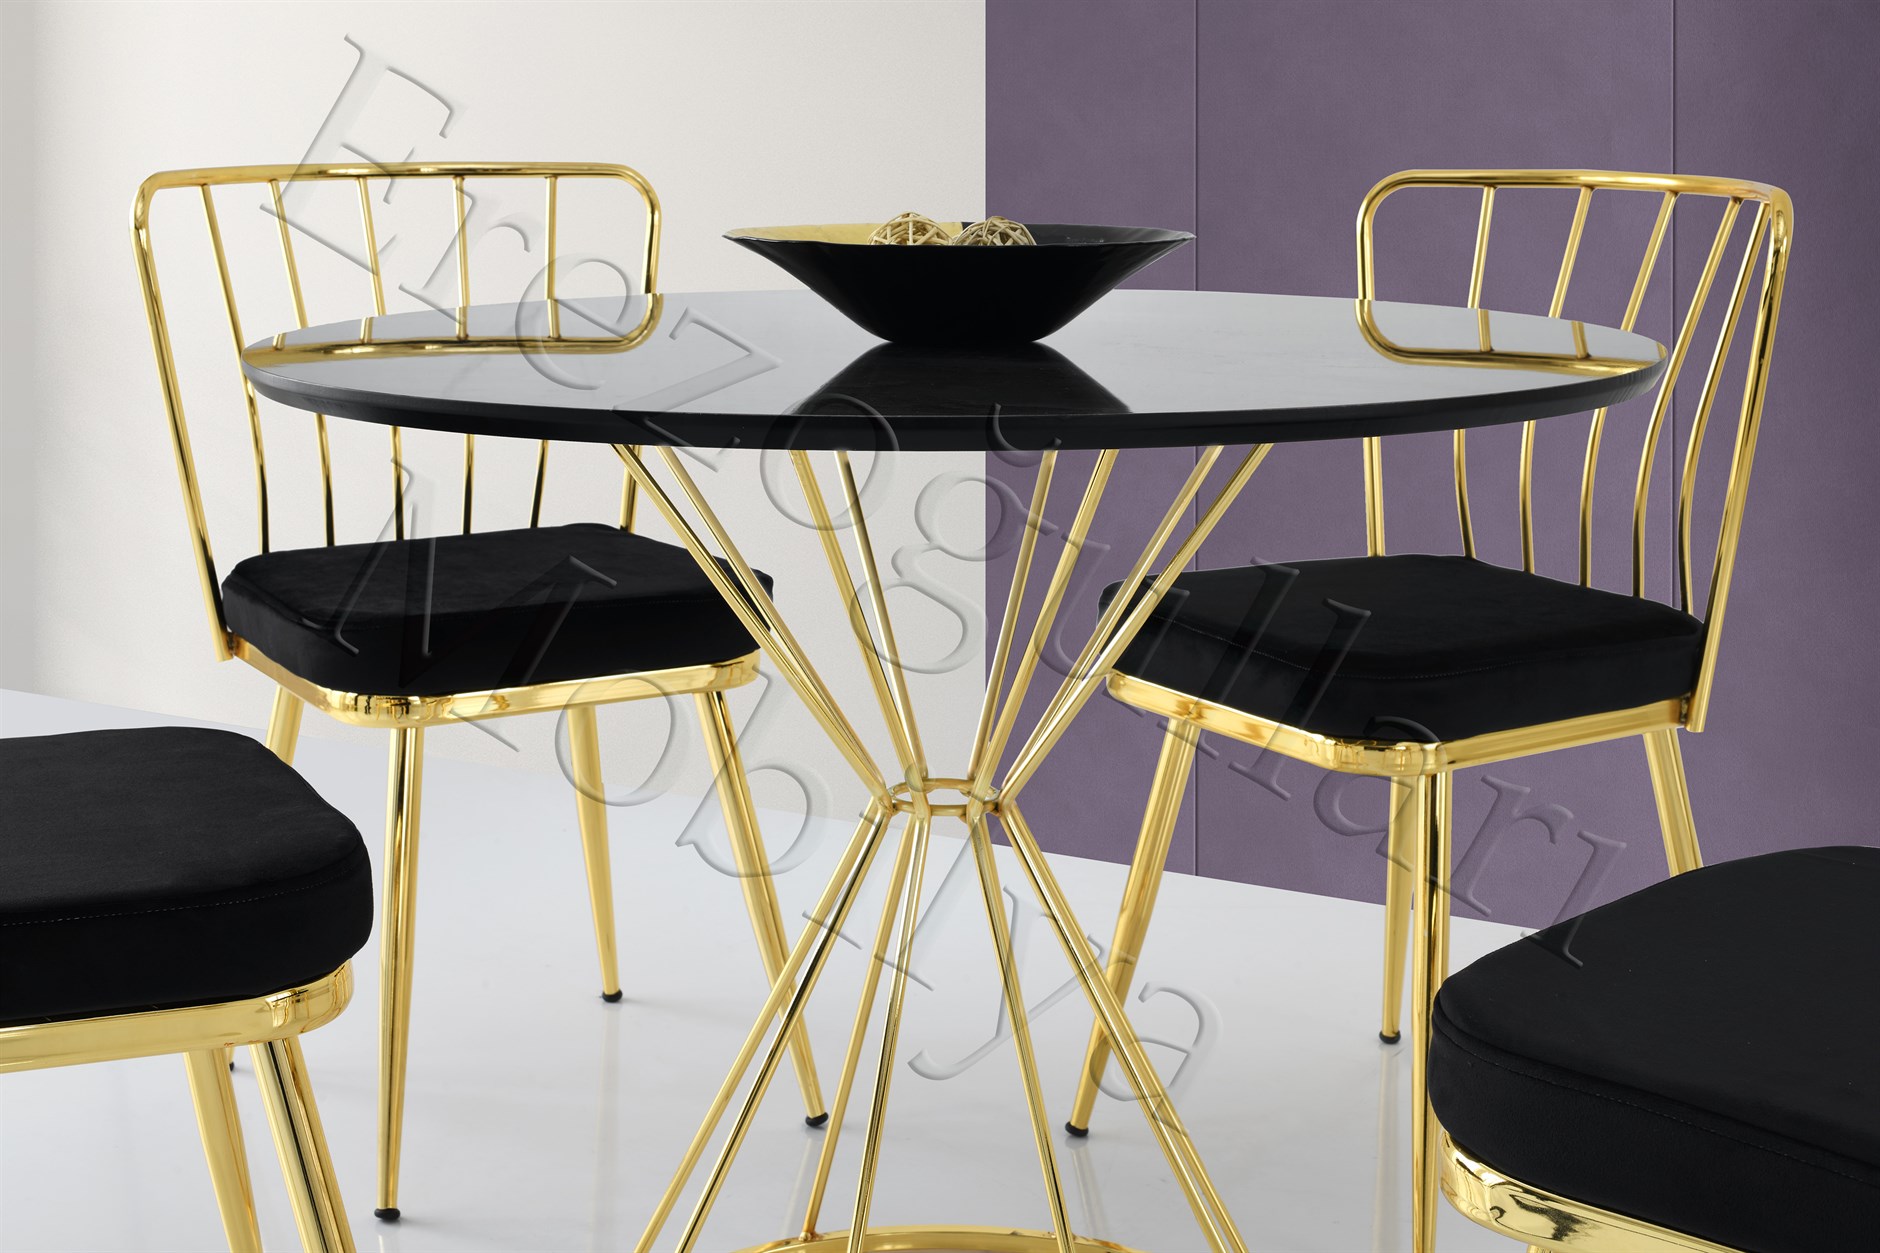 Kum Saati High Gloss Siyah Gold Mutfak Masa 4 Sandalye Seti 90cm